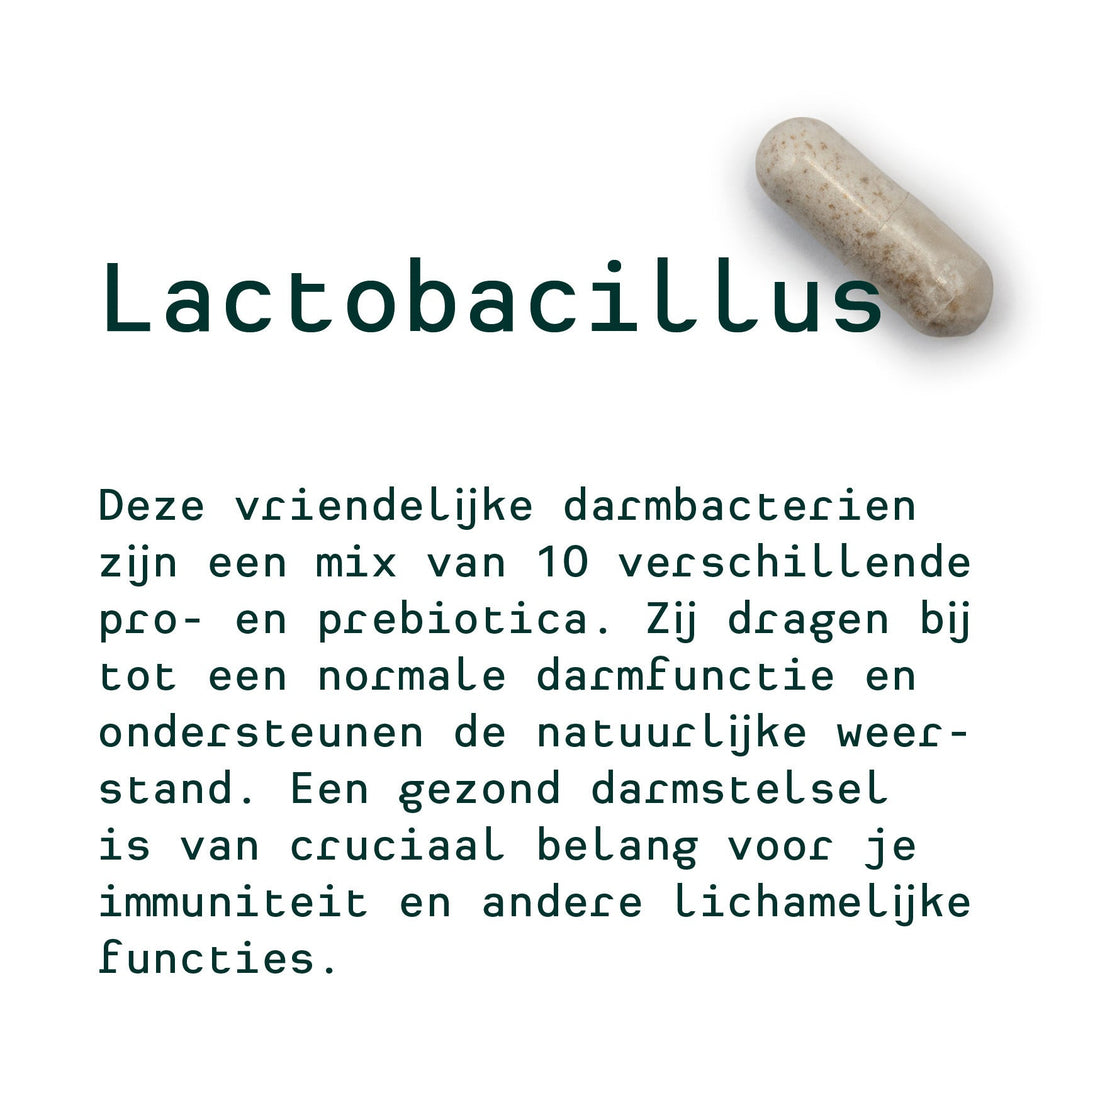 Metis Personalised Van Daria (Bamboo & Olive Blad, Lactobacillus, Digest)